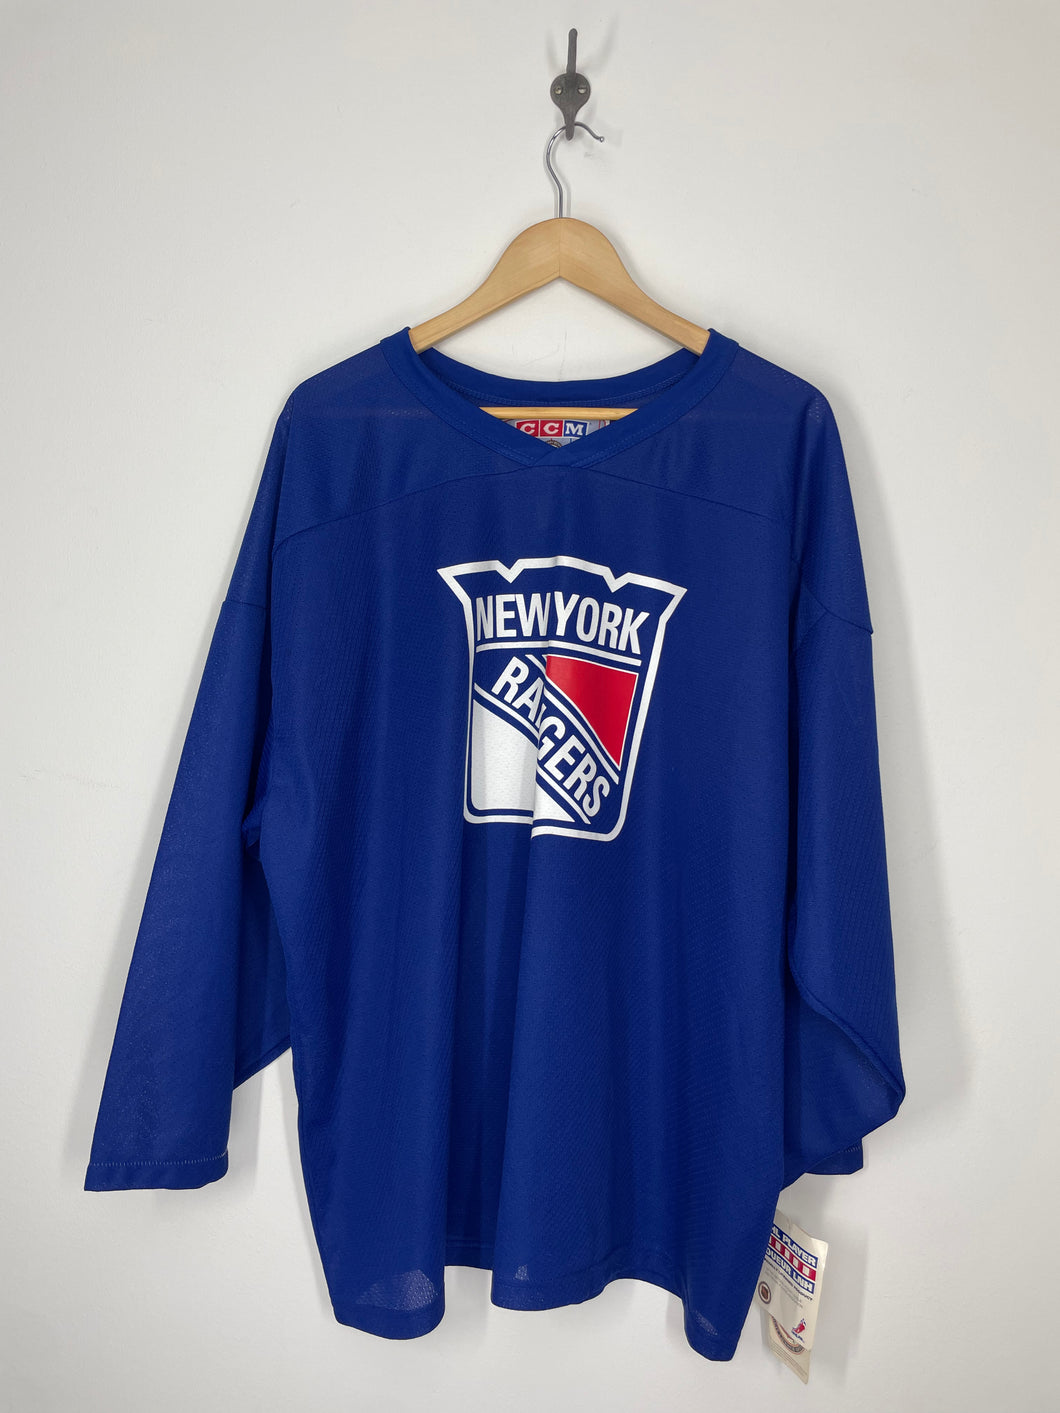 Shirts, Nhl New York Rangers Polo Shirt